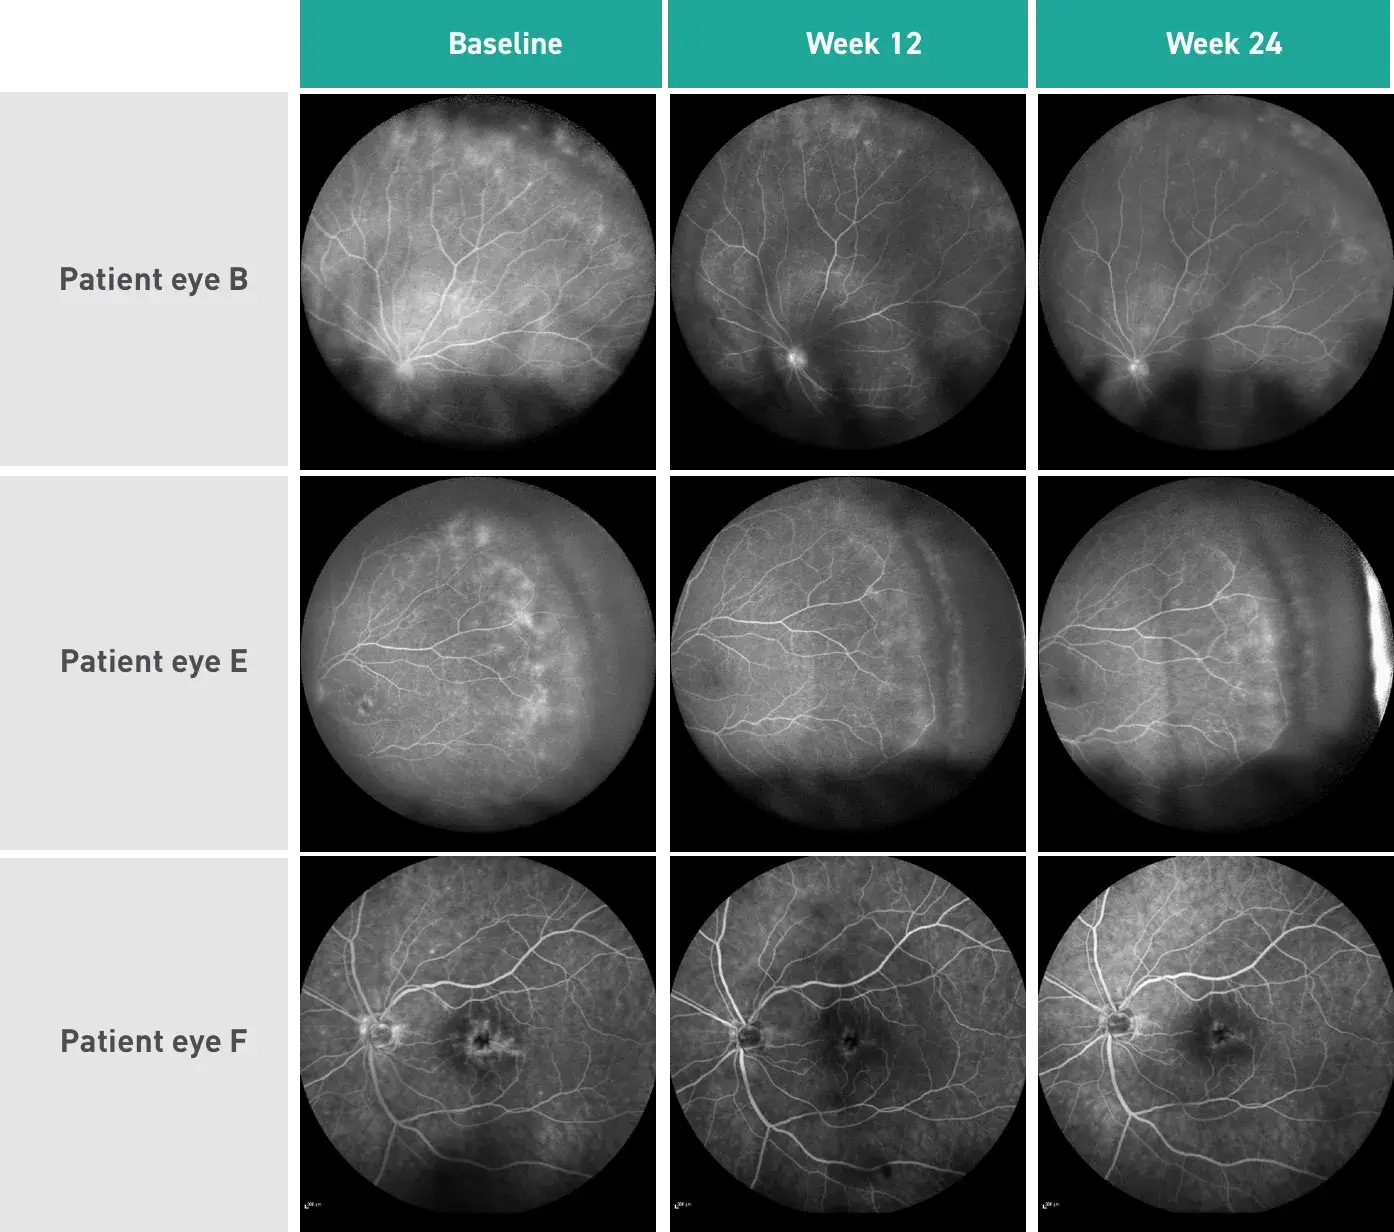 Acthar Gel retinal vasculitis results: improvement seen by Week 24